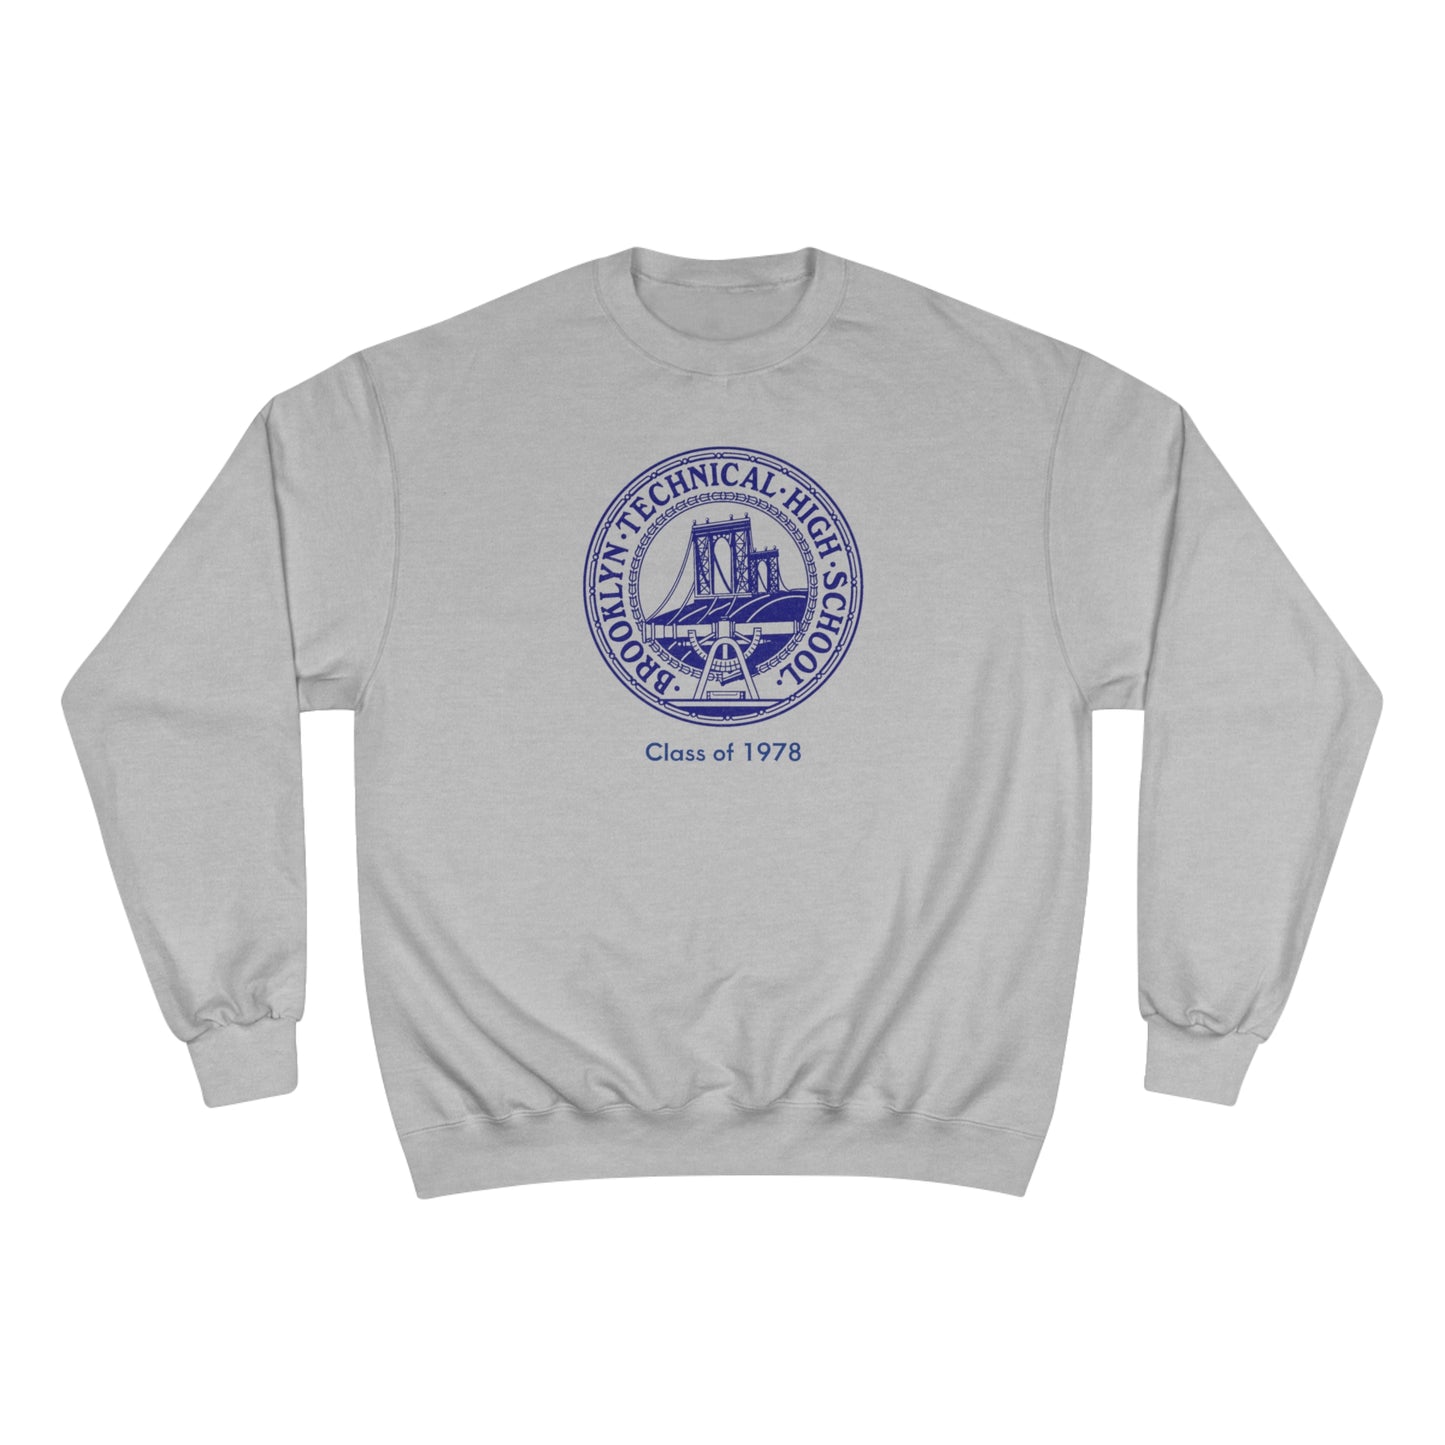 Classic Tech Seal - Champion Crewneck Sweatshirt - Class Of 1978